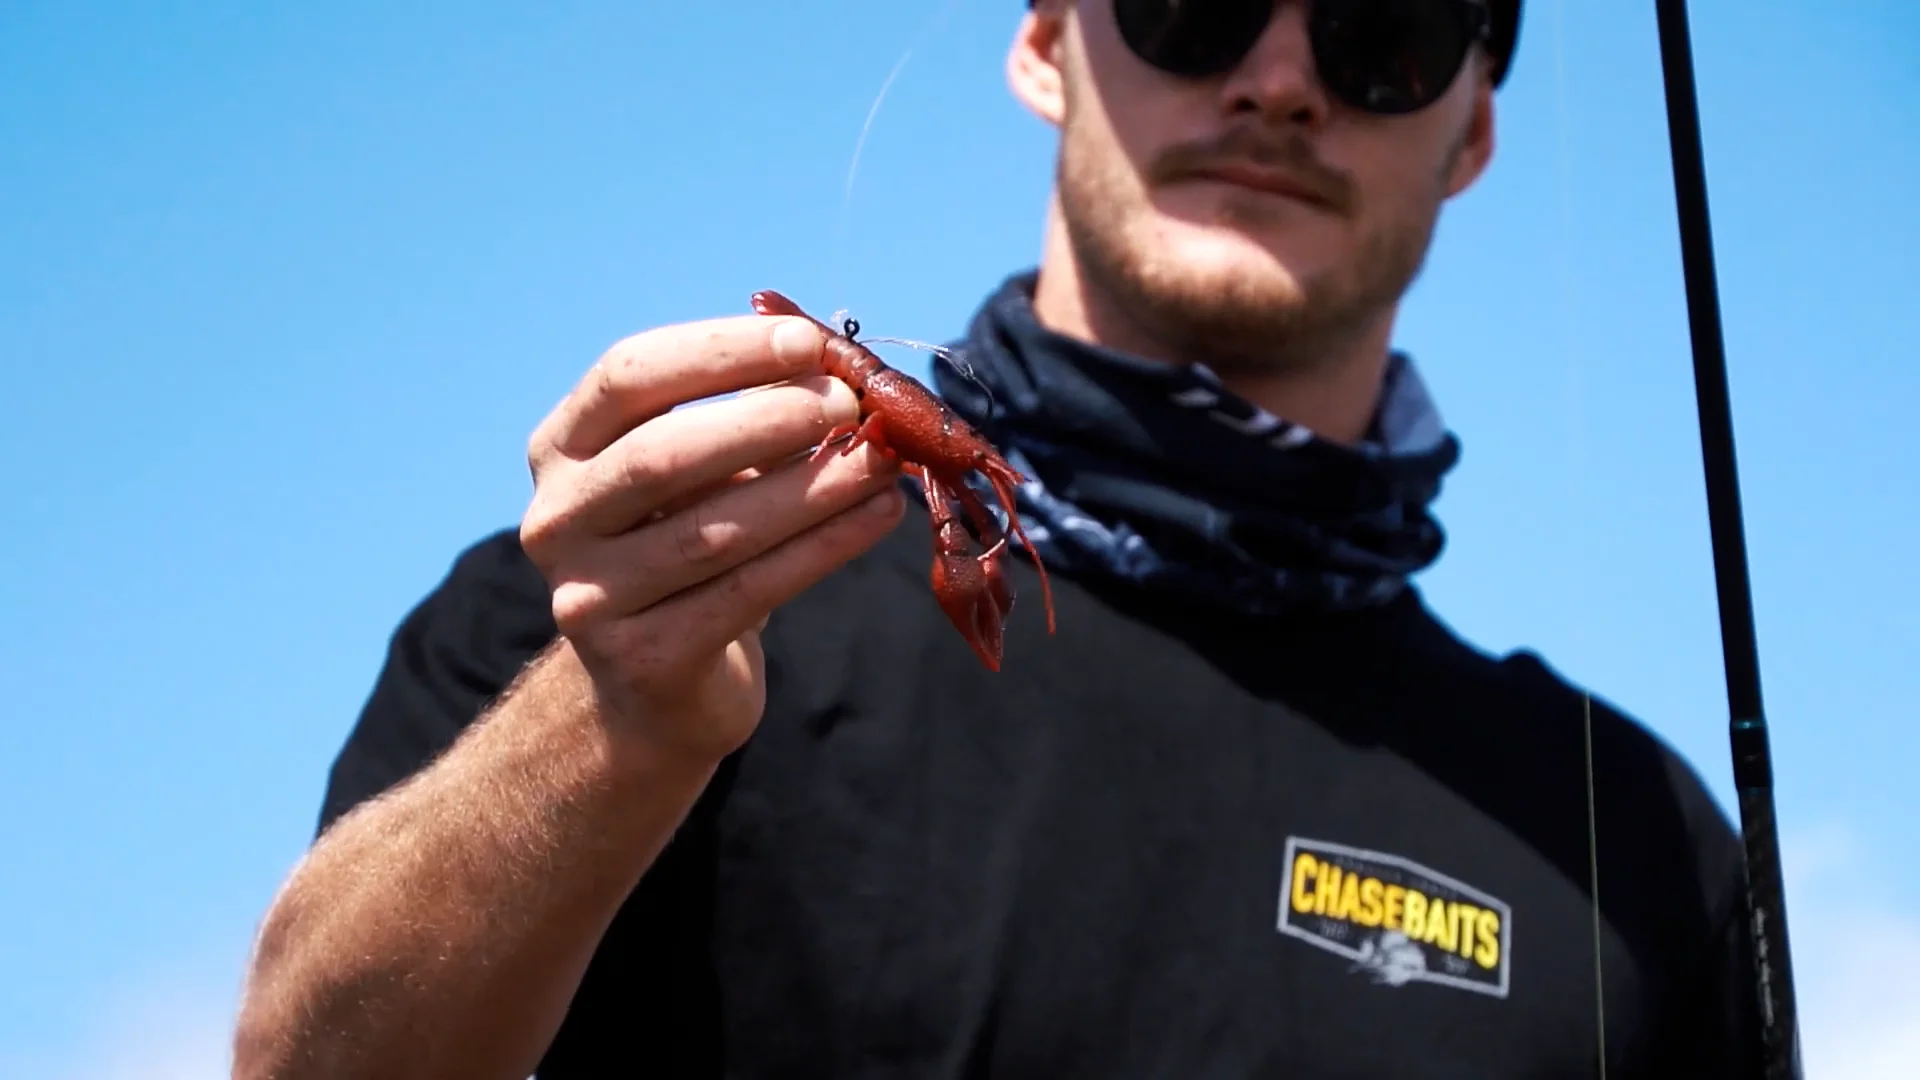 Chasebaits - The Mudbug - Ultra-Realistic Crawfish Lure on Vimeo